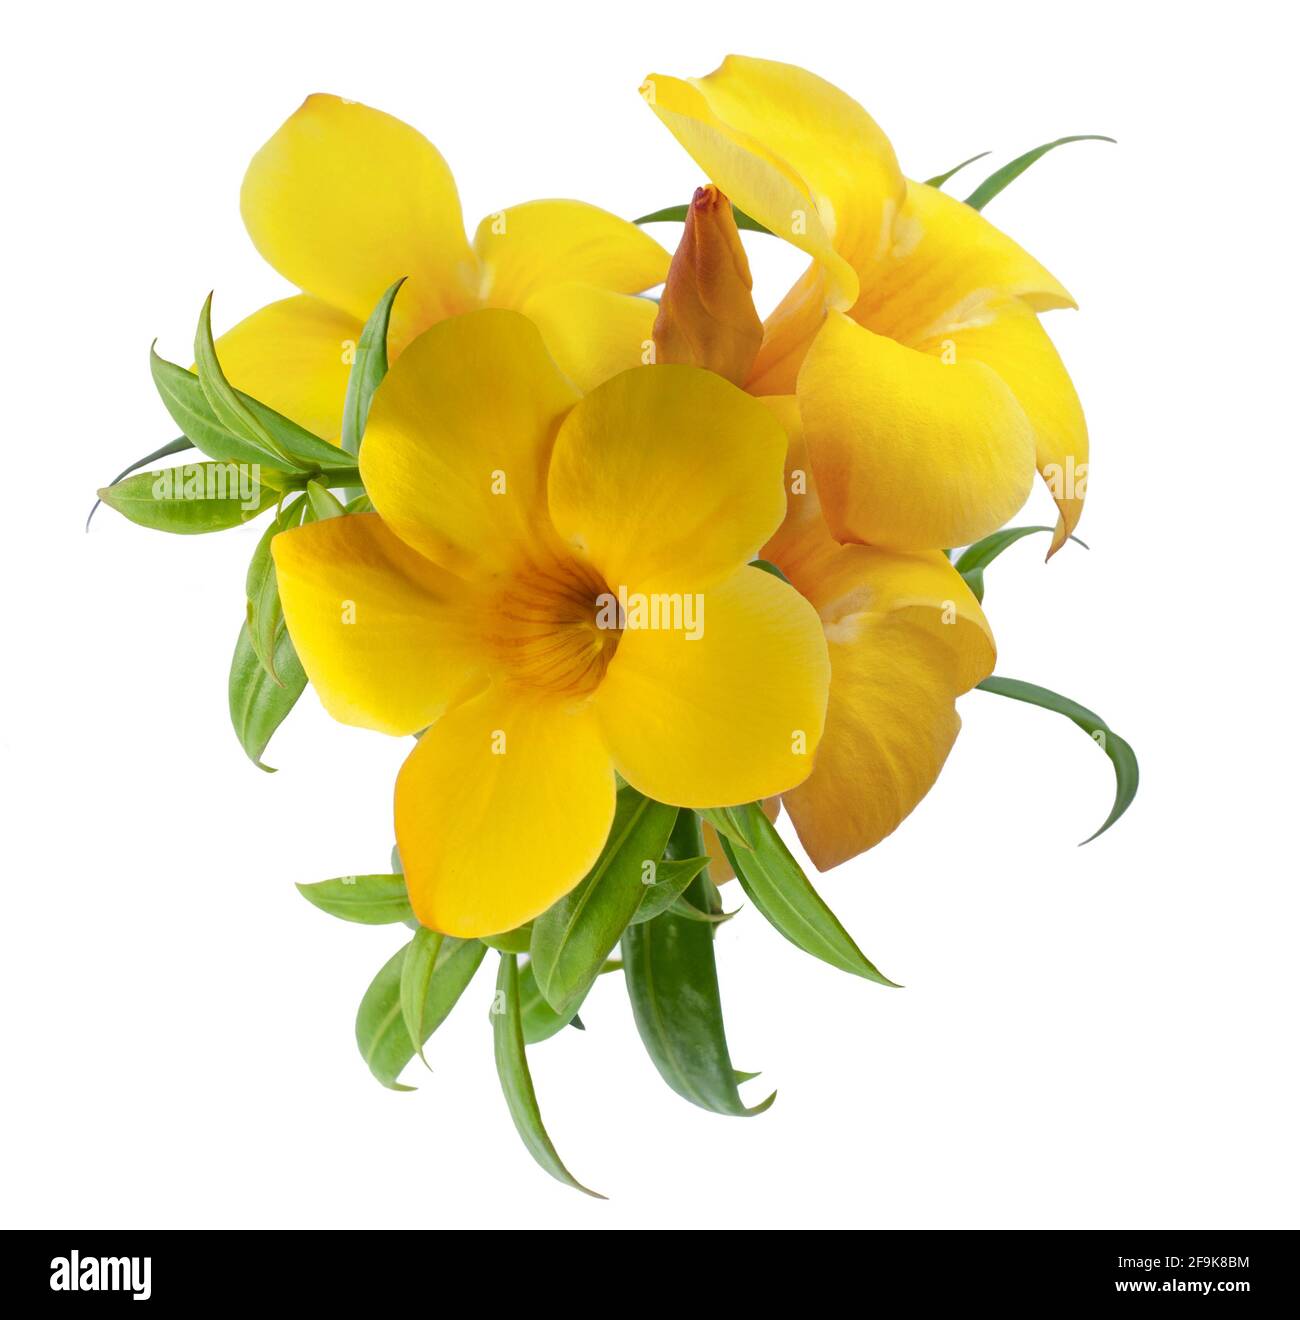 Golden trumpet or Allamanda  flower isolated on white background Stock Photo